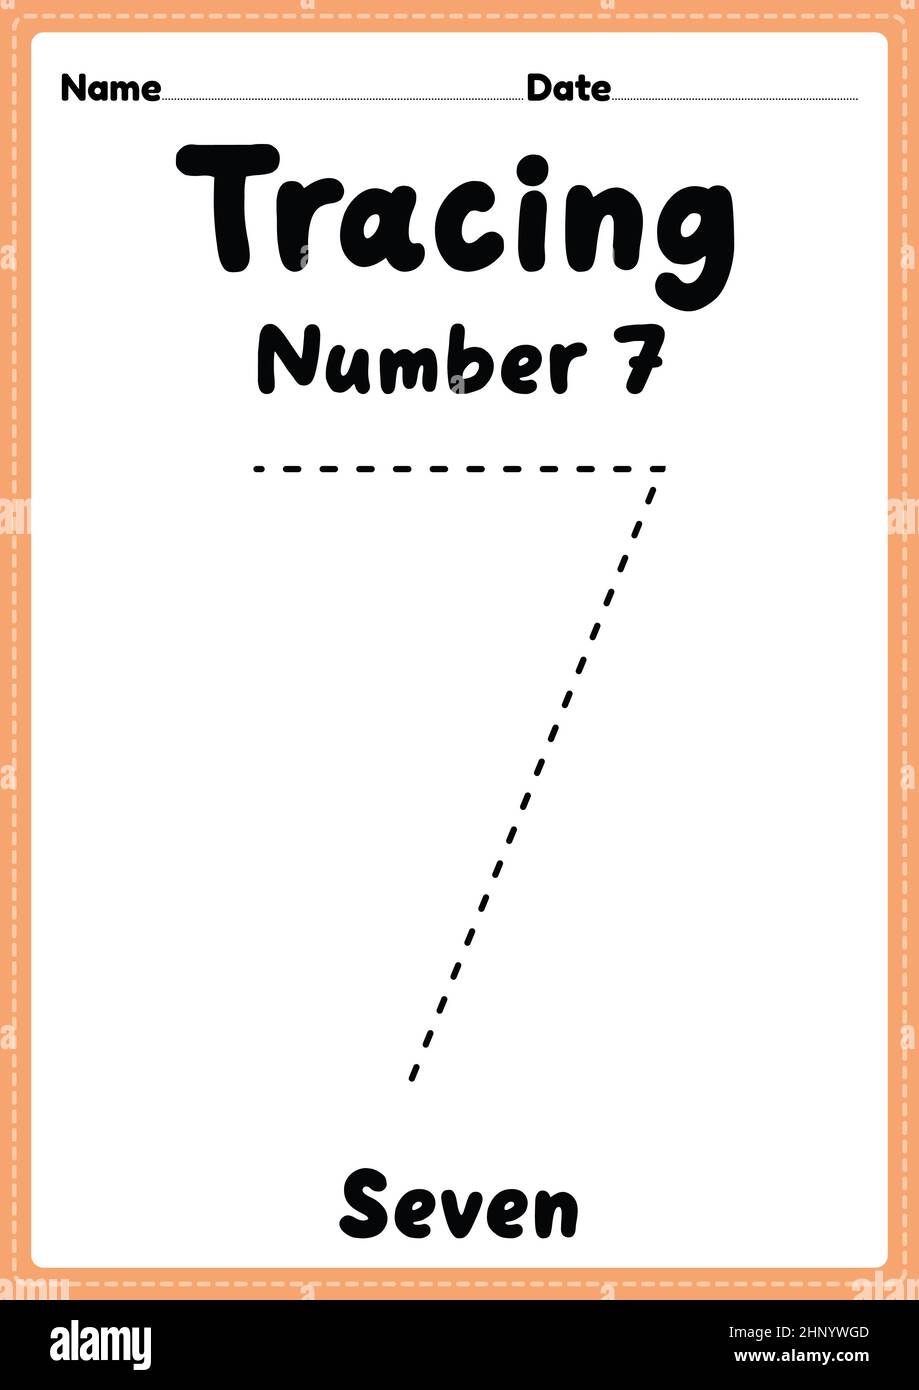 Tracing number 7 worksheet for kindergarten, preschool and Montessori kids for handwriting practice activities in a printable page. Stock Photo